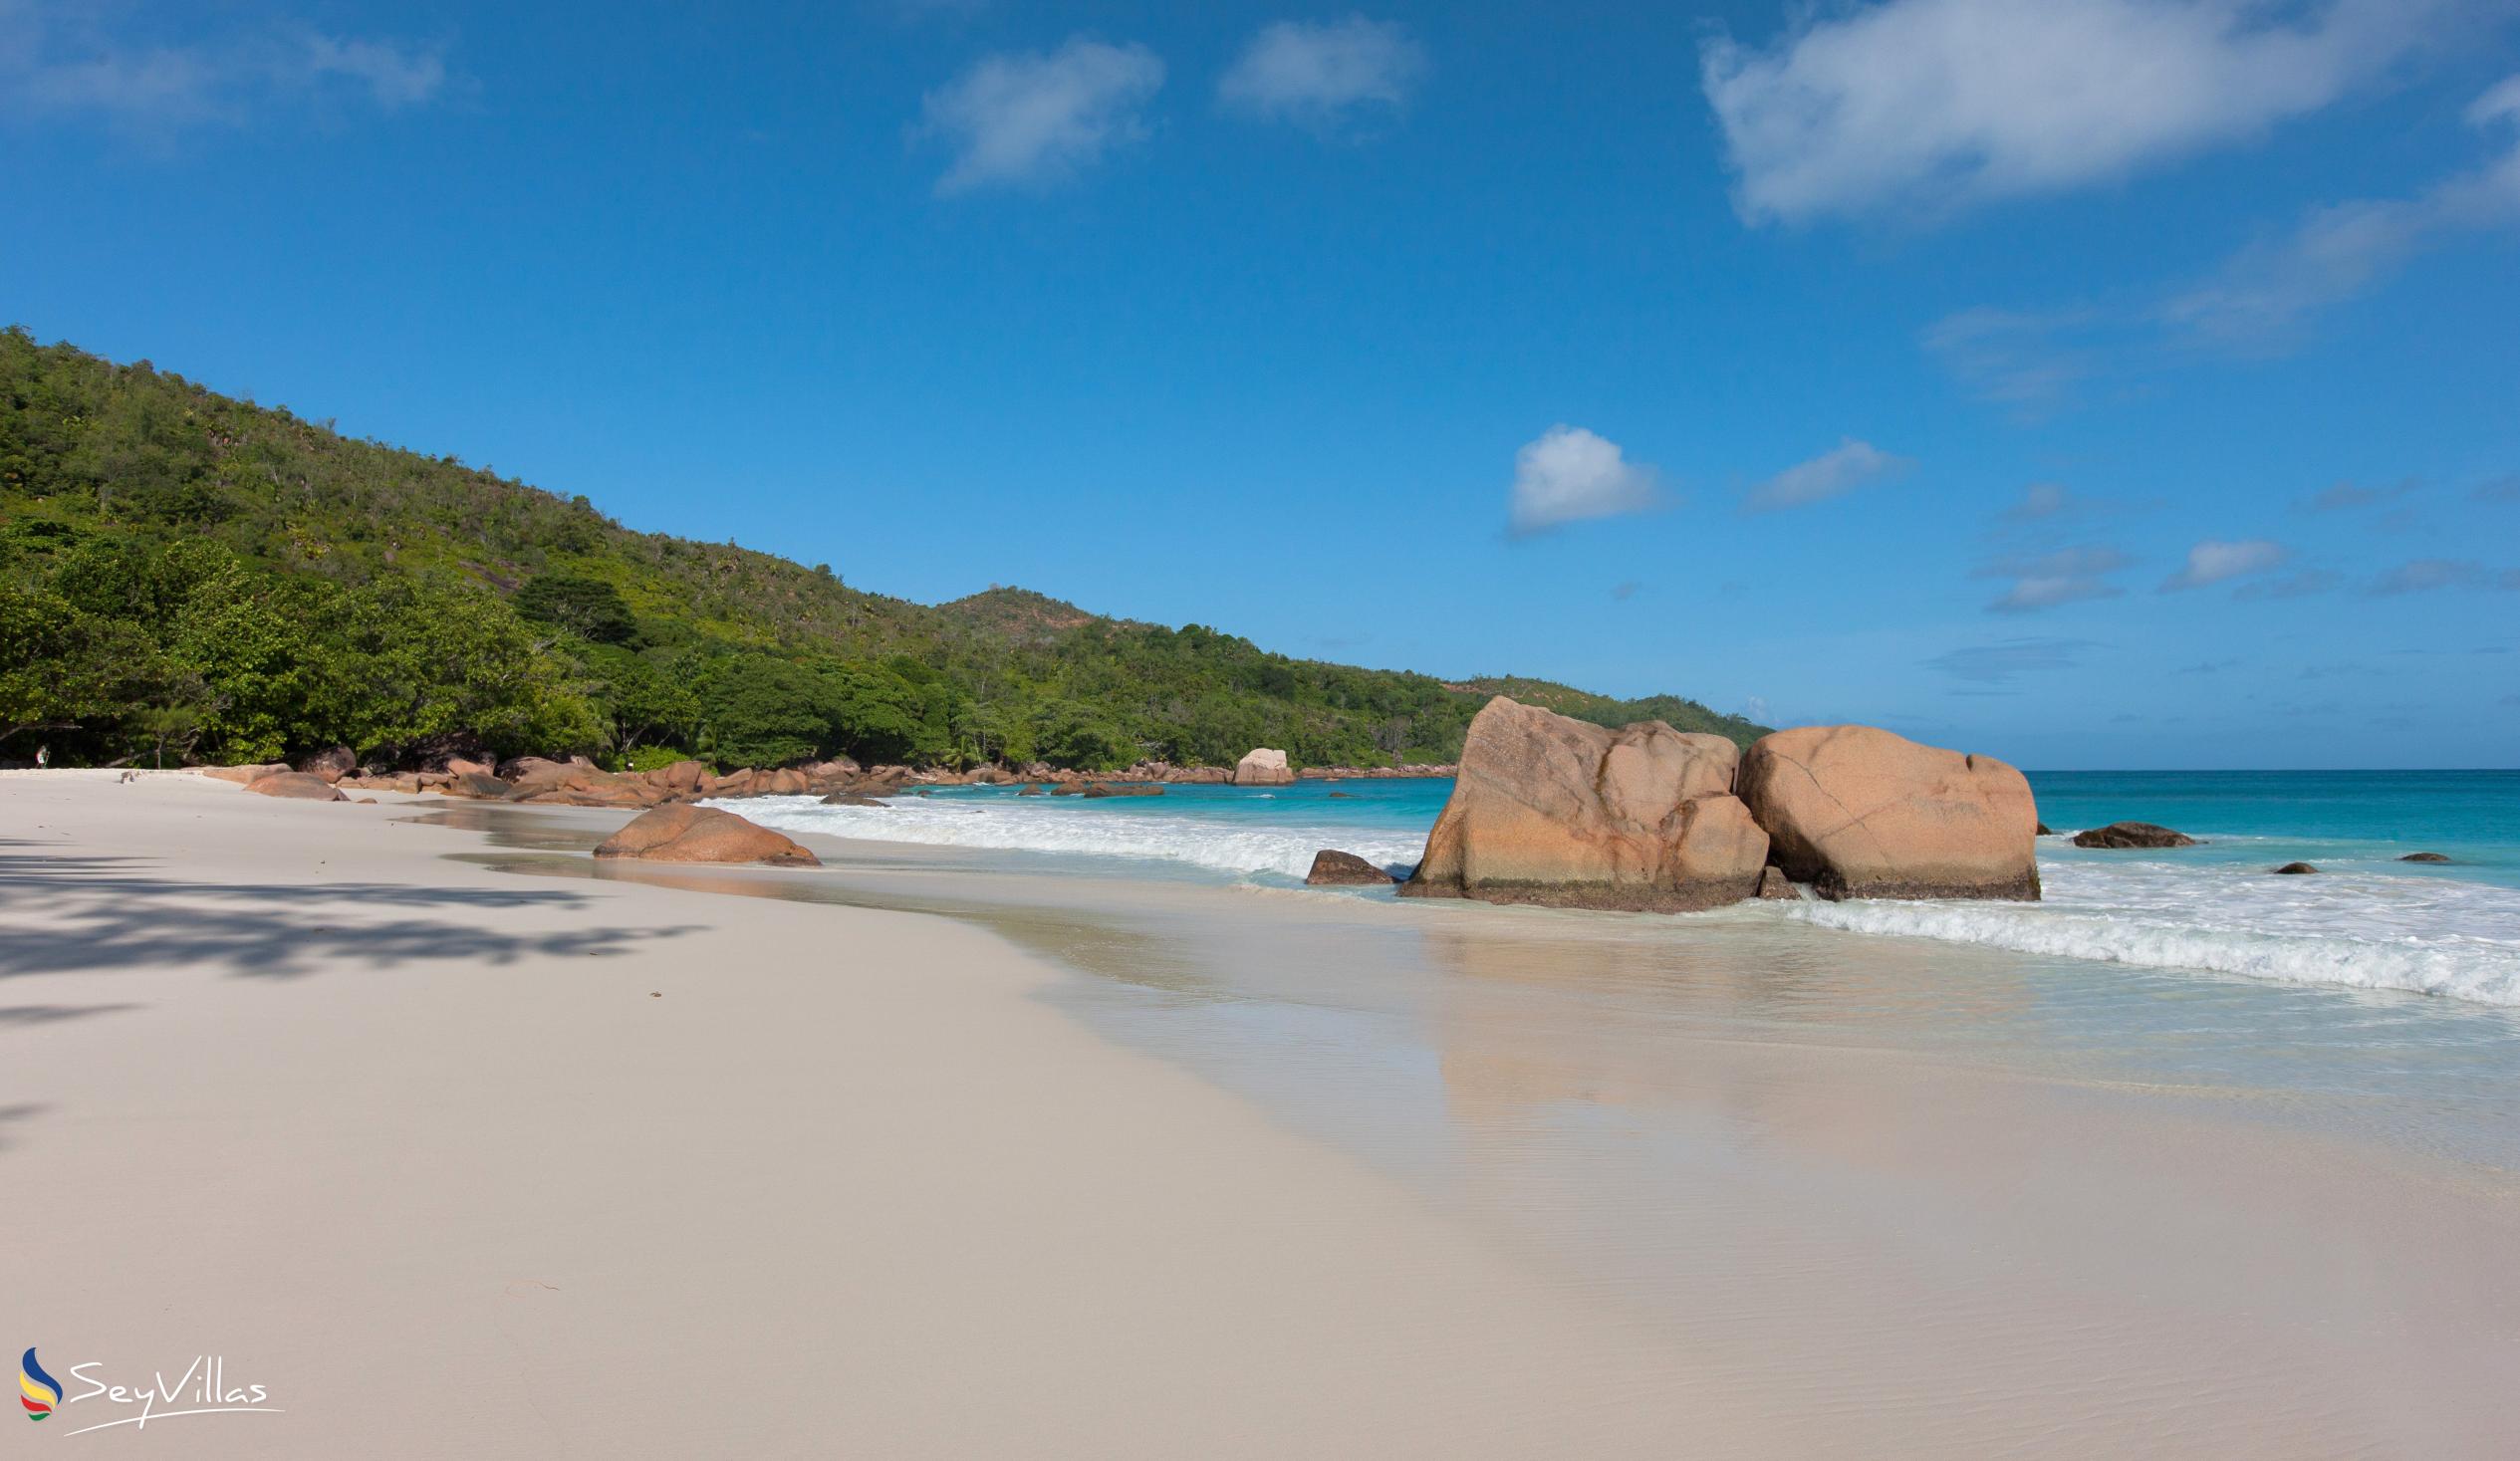 Photo 6: Anse Lazio - Praslin (Seychelles)